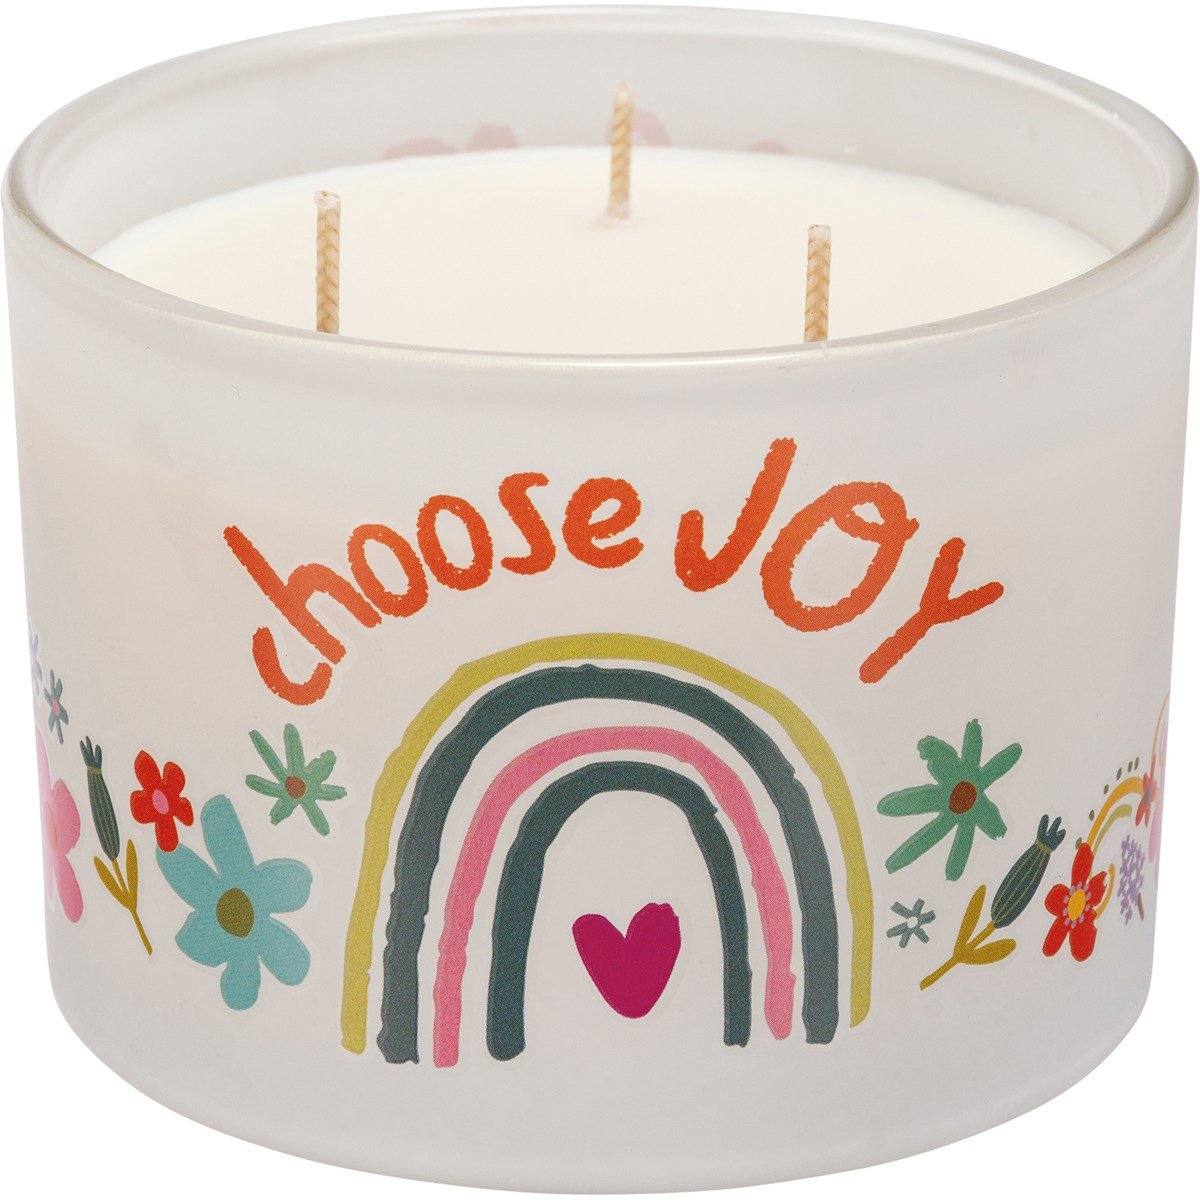 Choose Joy Candle - Soy Wax, Glass, Cotton